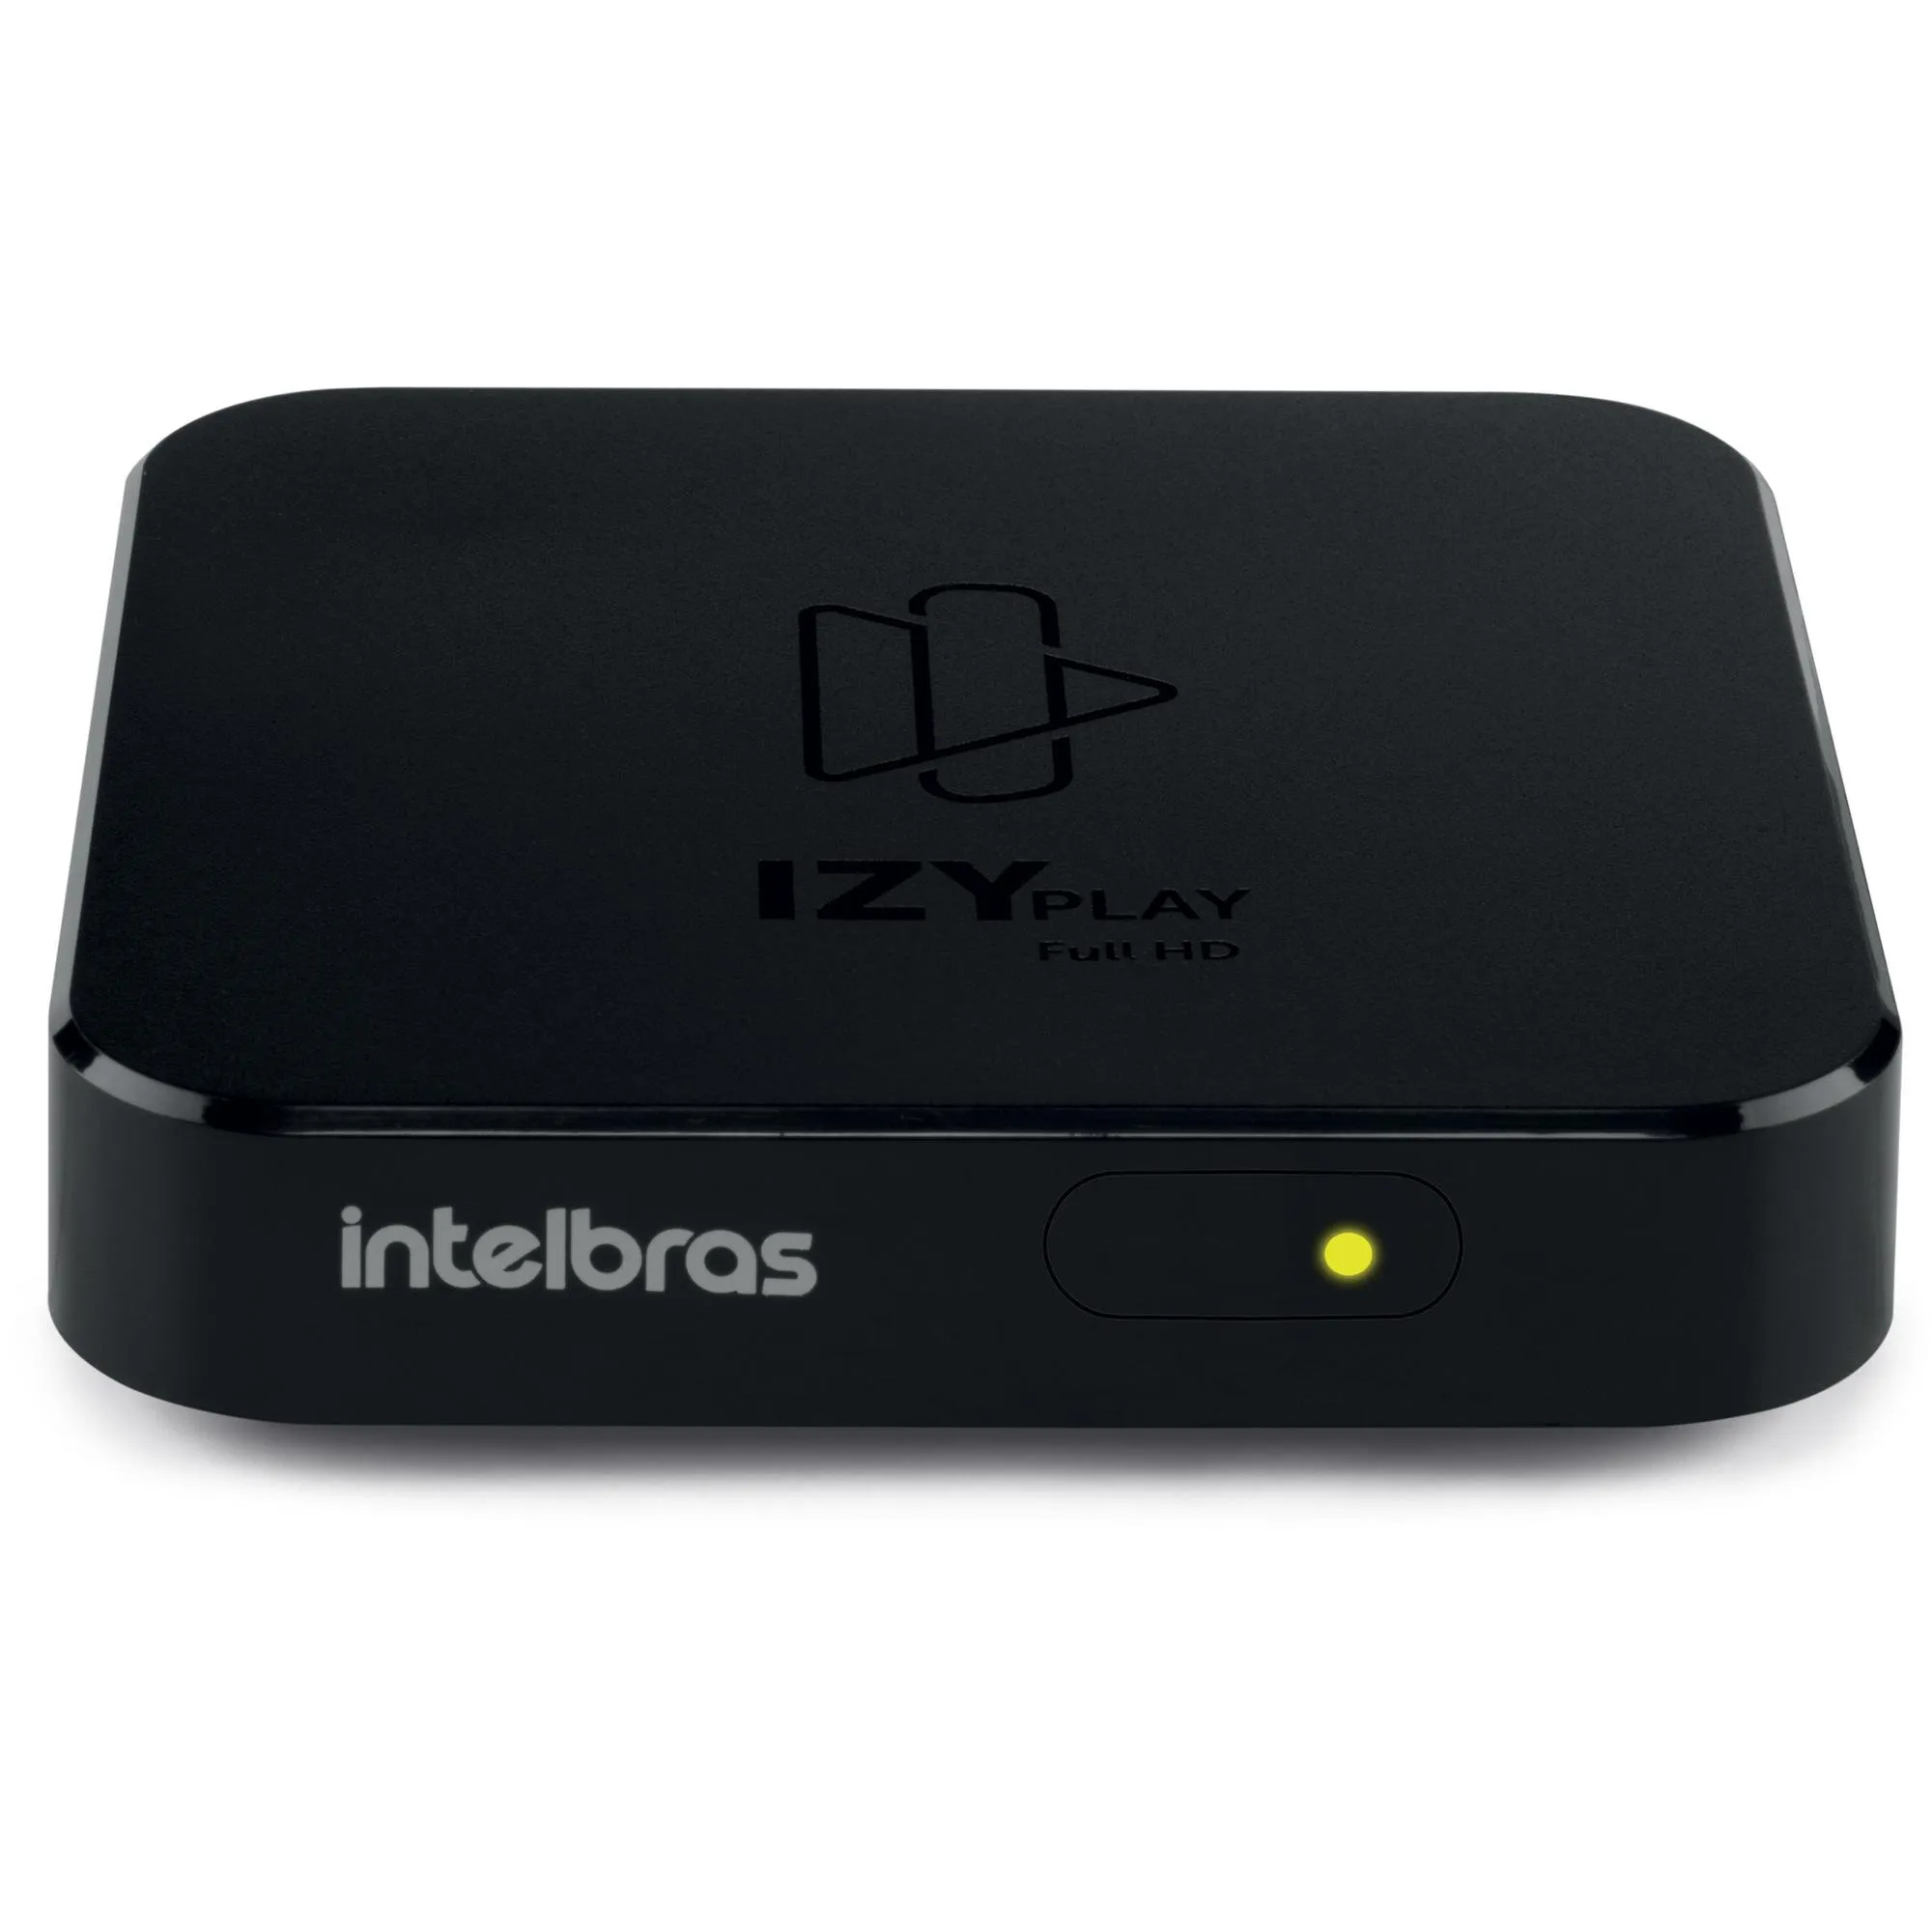 SMART BOX ANDROID INTELBRAS TV IZY PLAY (78868)